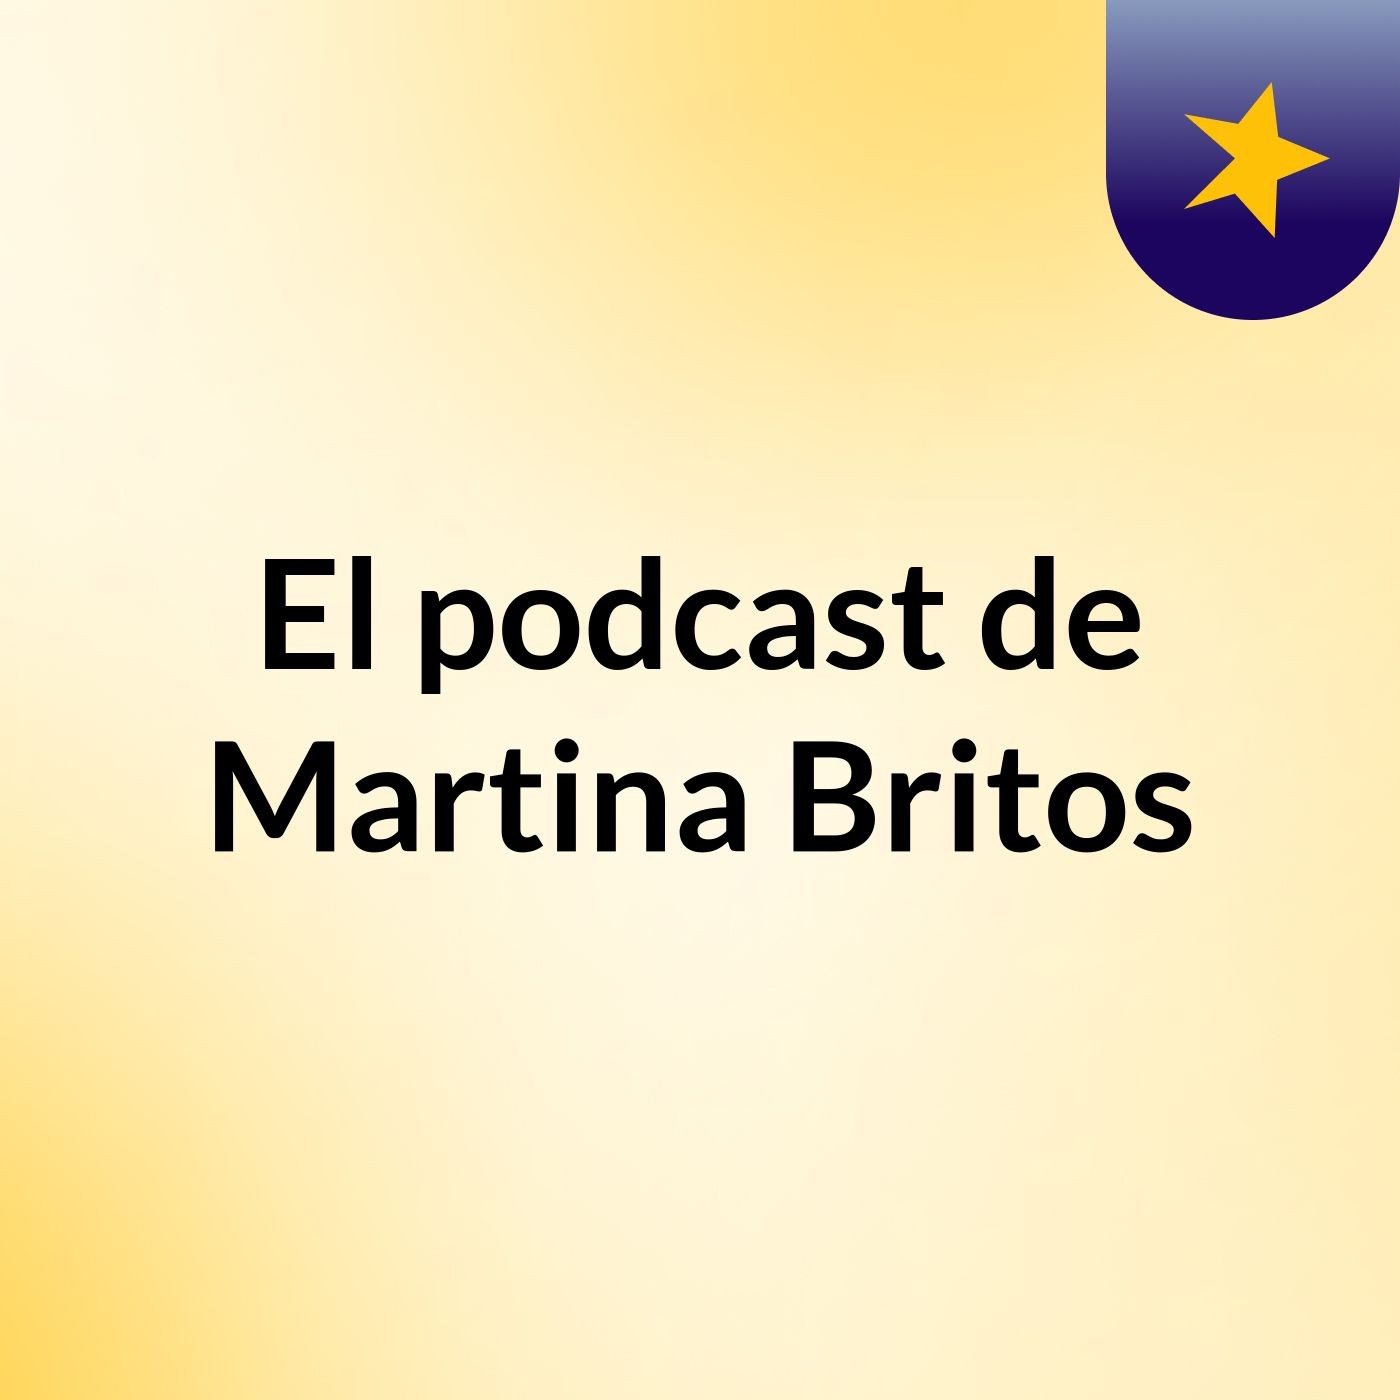 El podcast de Martina Britos